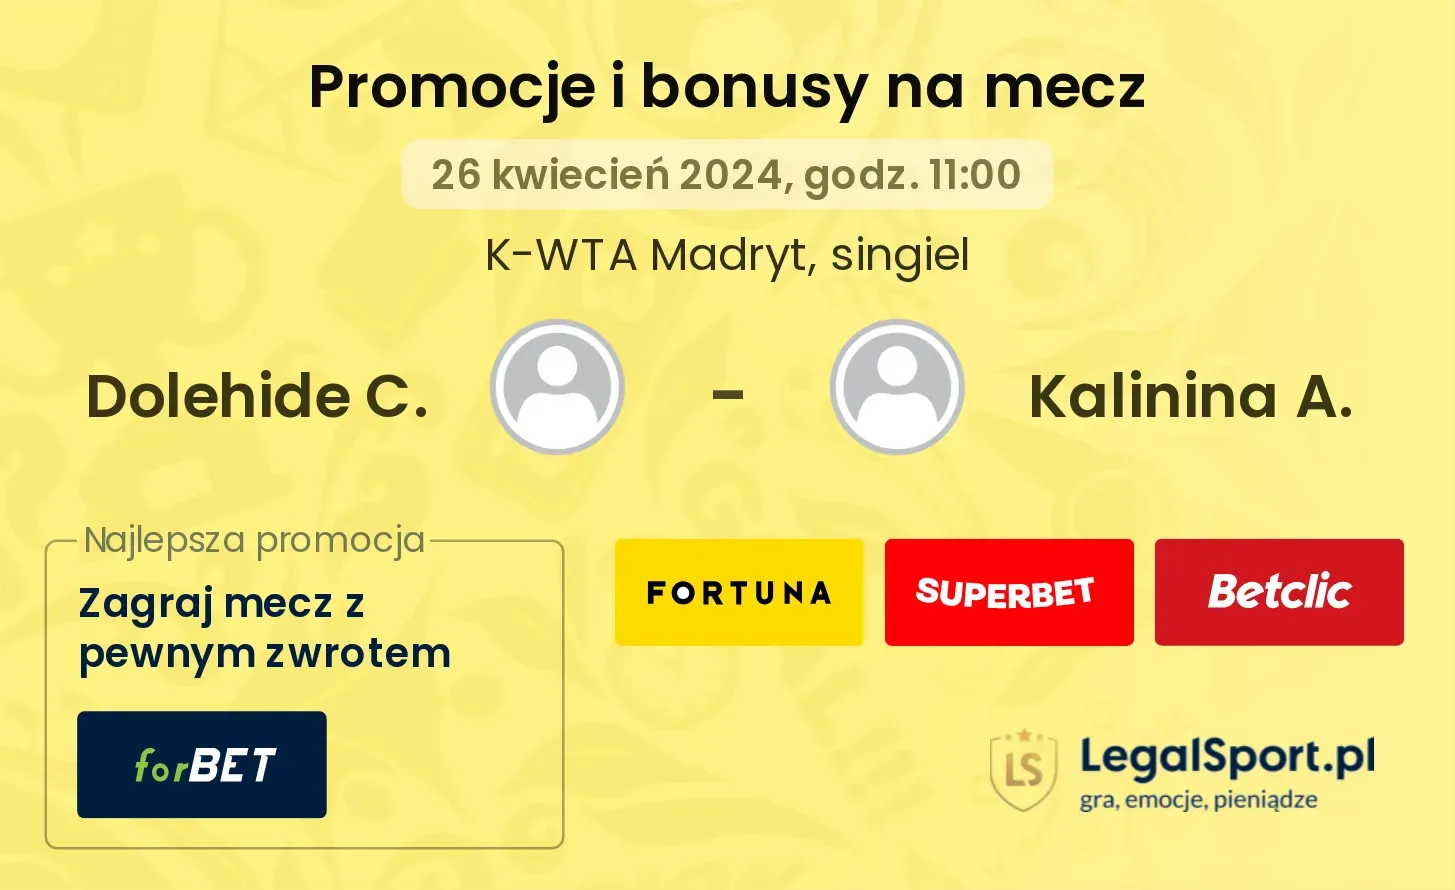 Dolehide C. - Kalinina A. promocje bonusy na mecz